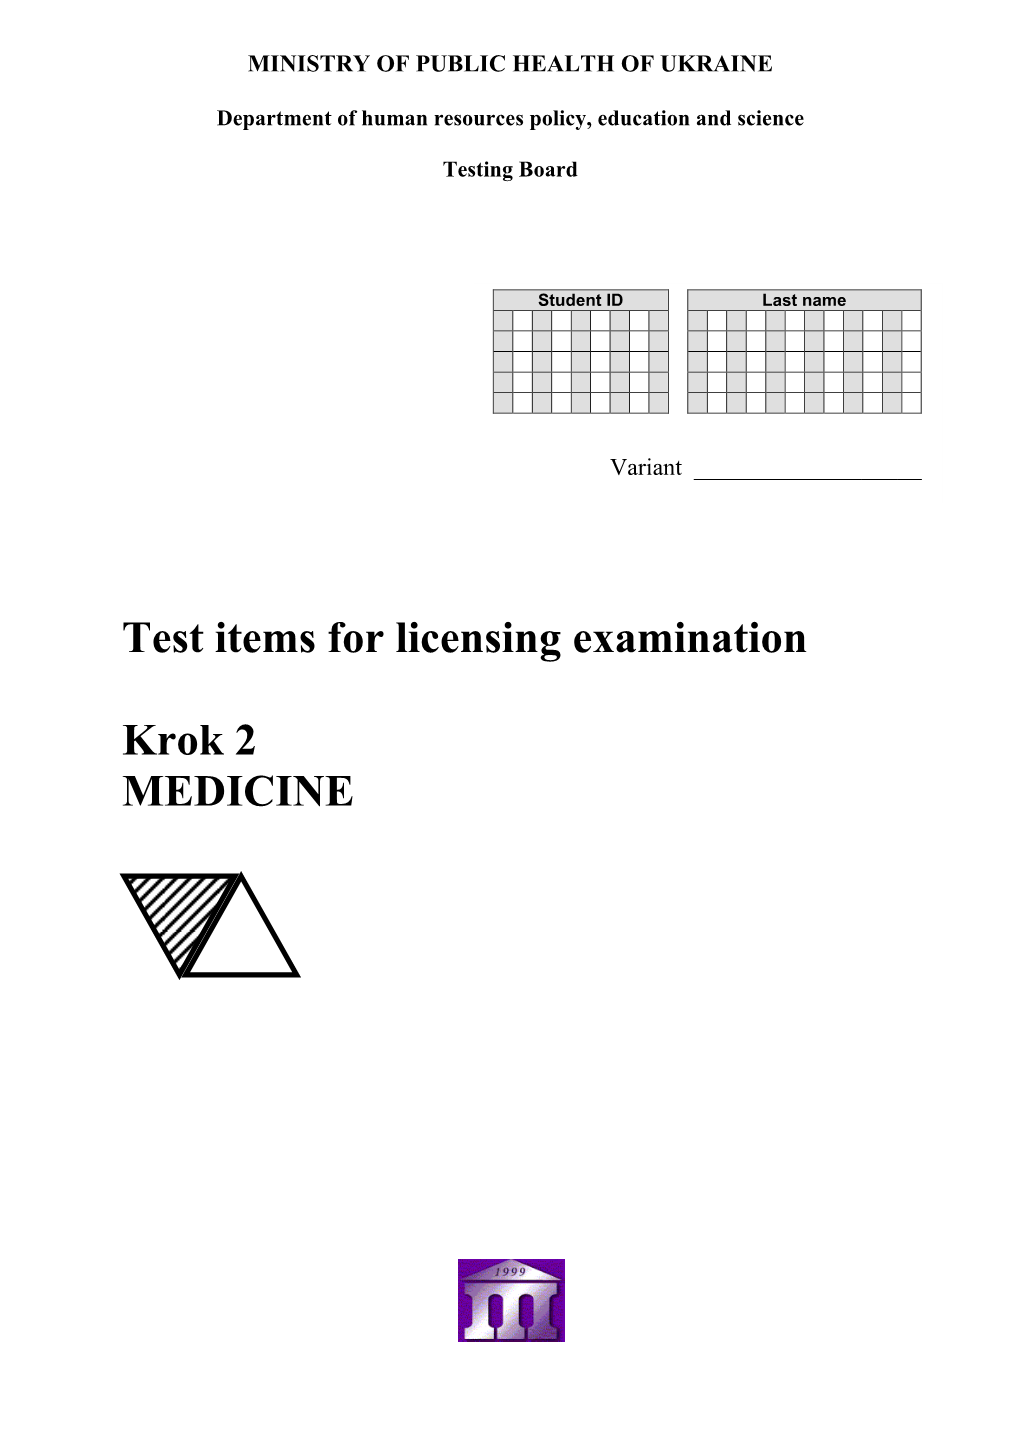 Test Items for Licensing Examination Krok 2 MEDICINE